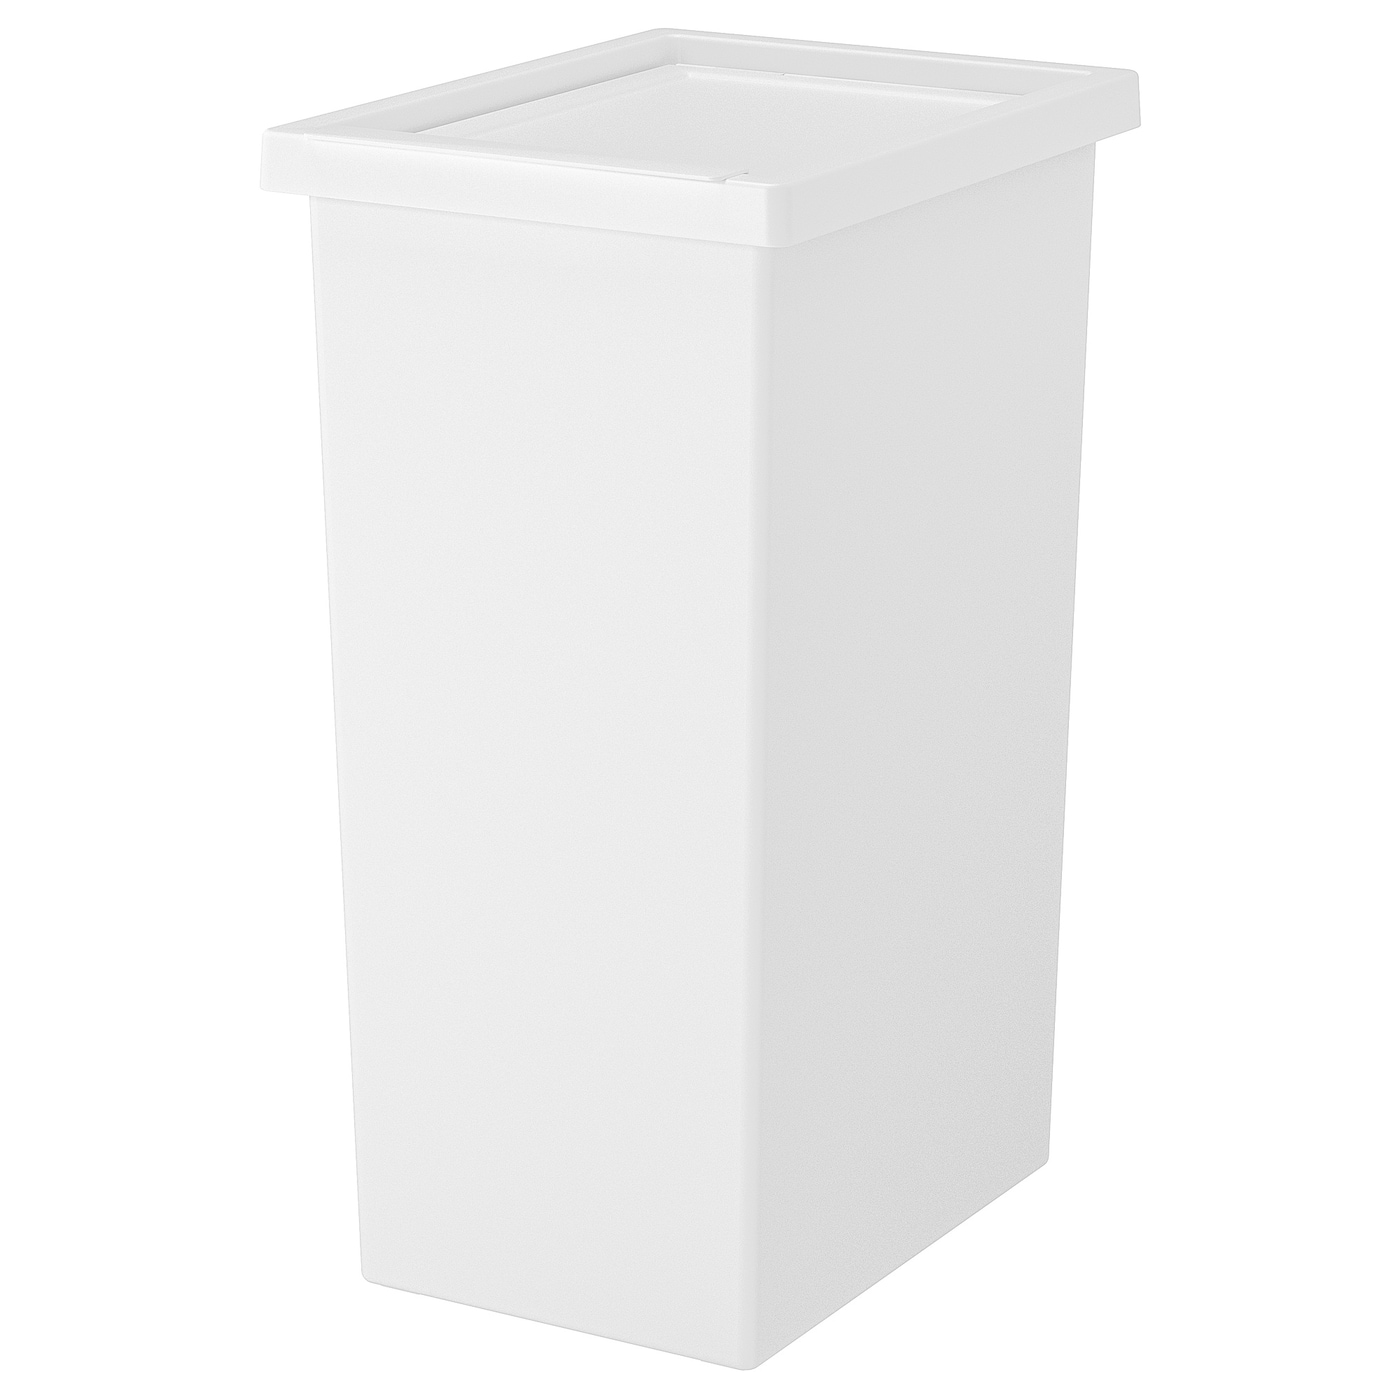 Пластиковая корзина с крышкой - IKEA FILUR, 42л, белый, ФИЛУР ИКЕА